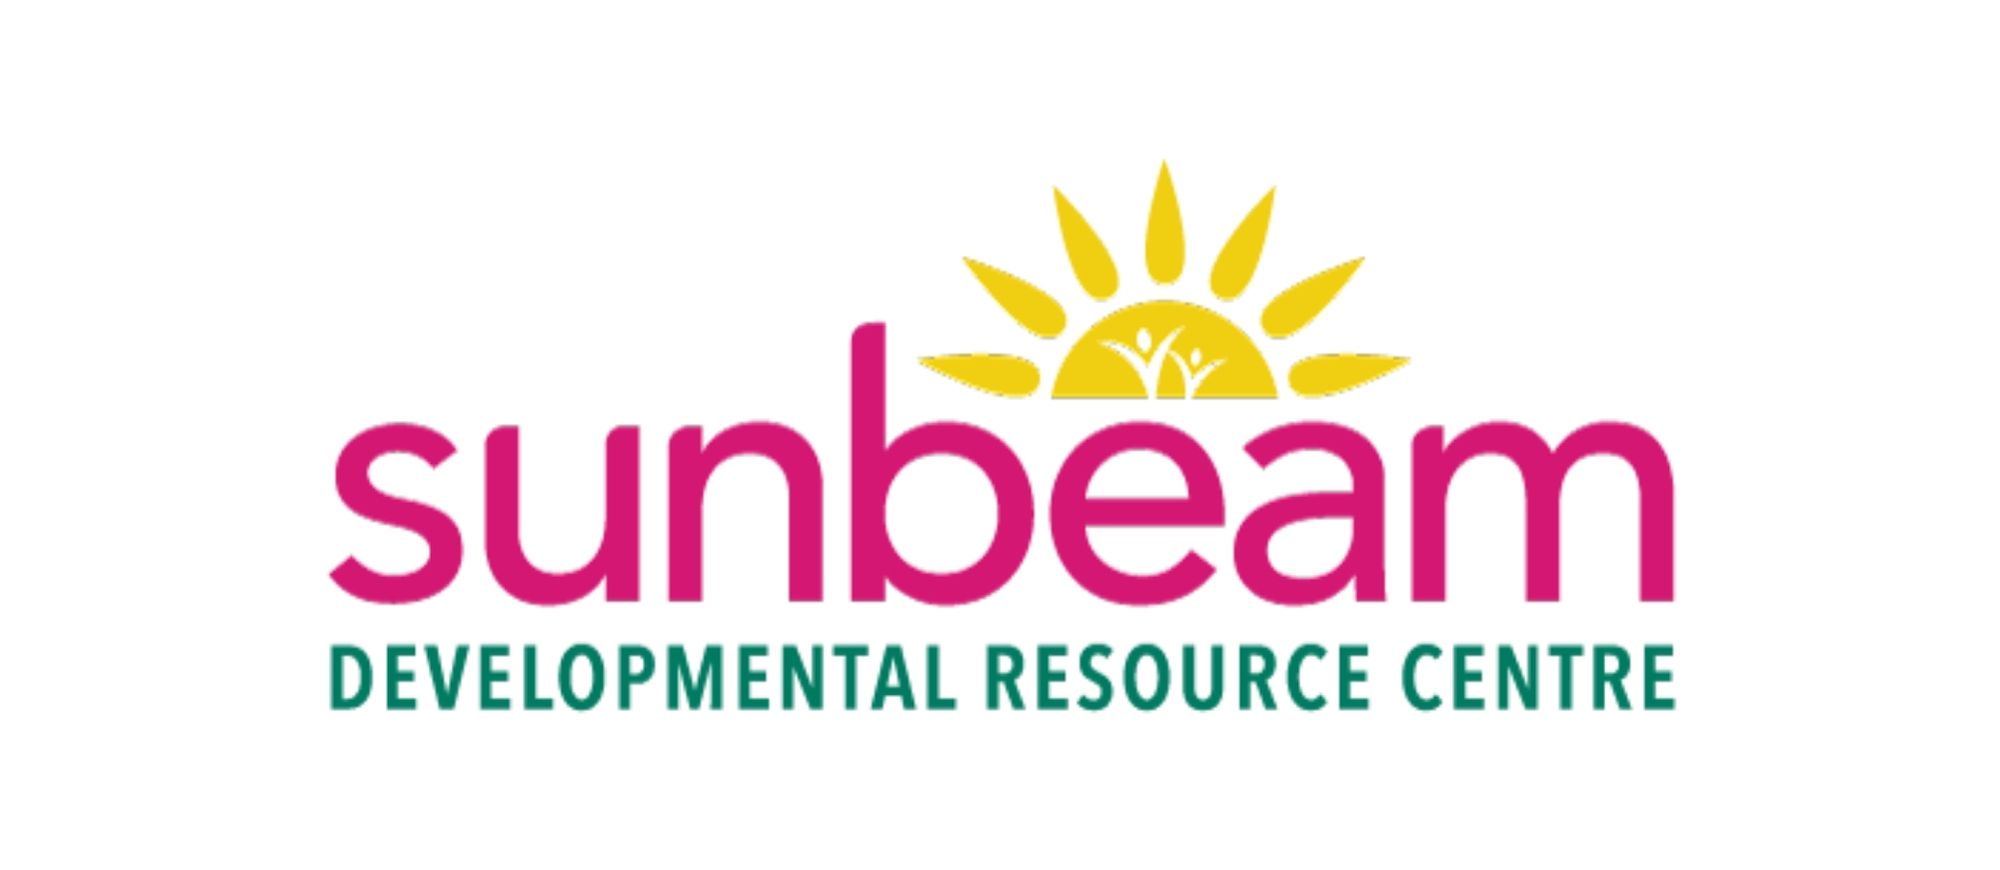 sunbeam developmental resource centre logo